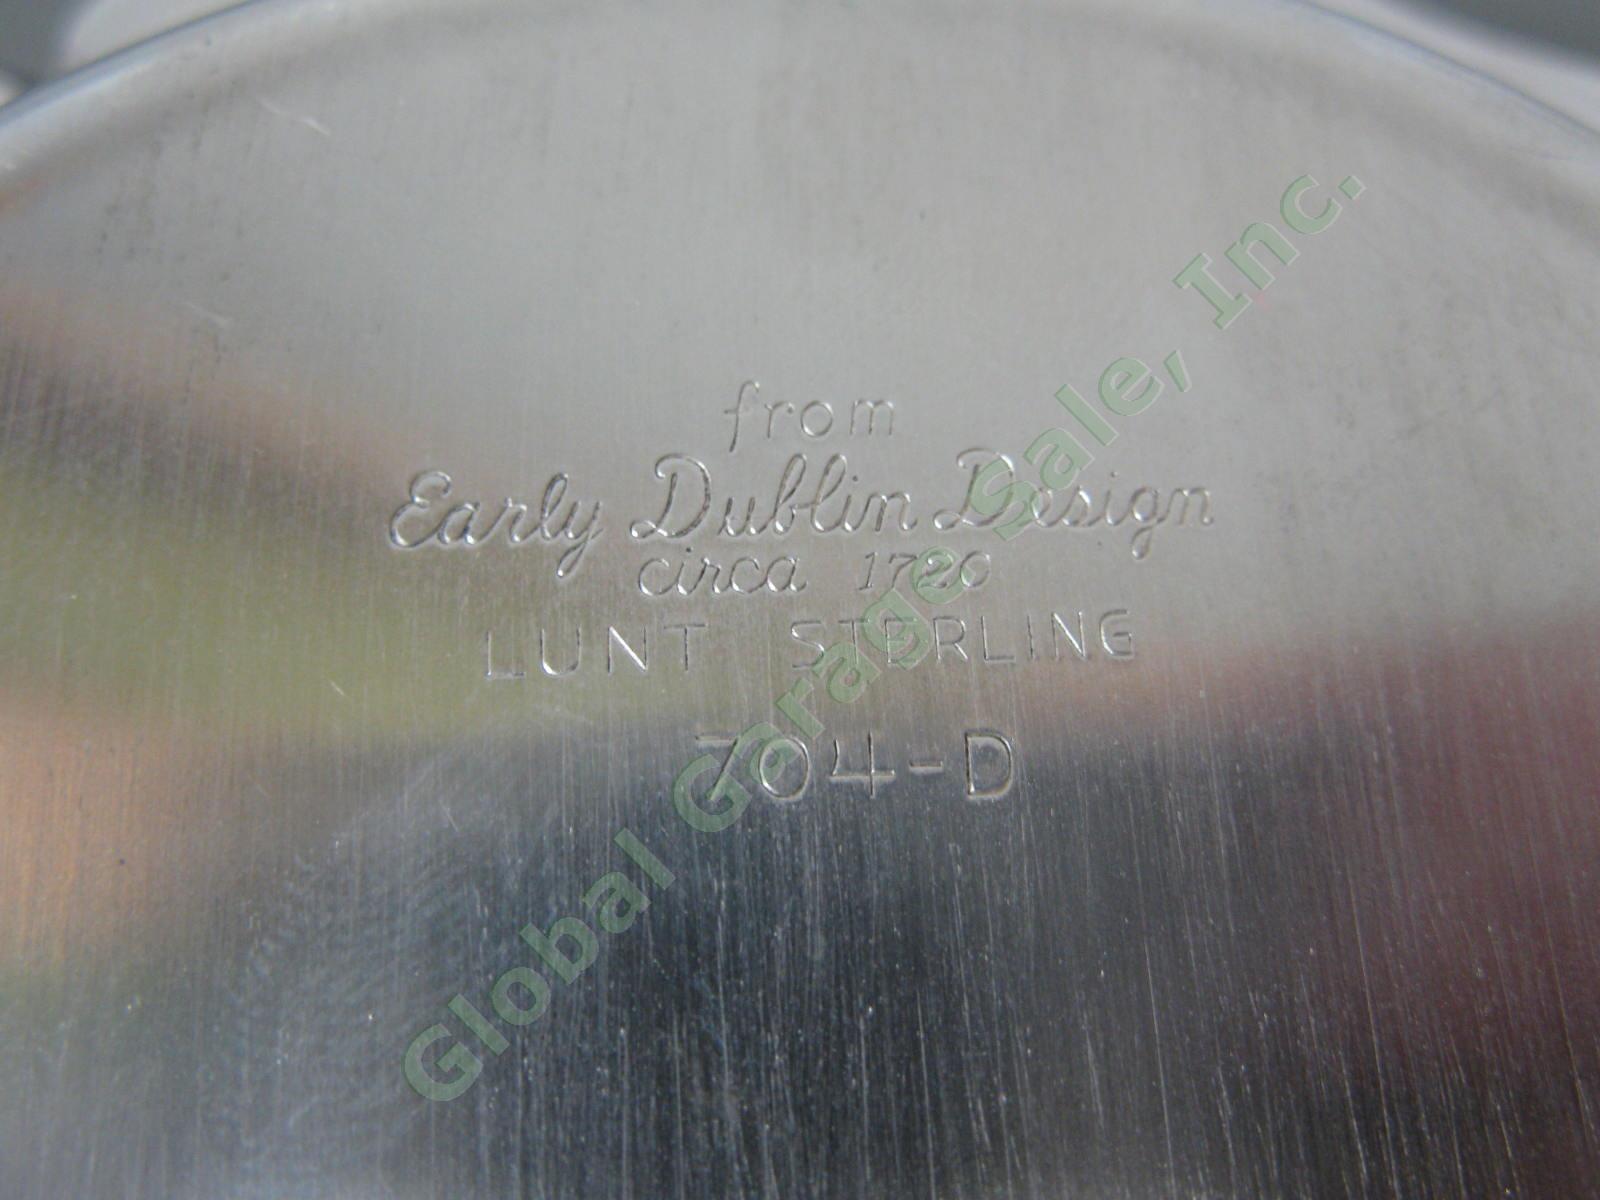 Lunt Sterling Silver 704-D Early Dublin Design Circa 1720 Bowl 129 Grams 925 NR 4